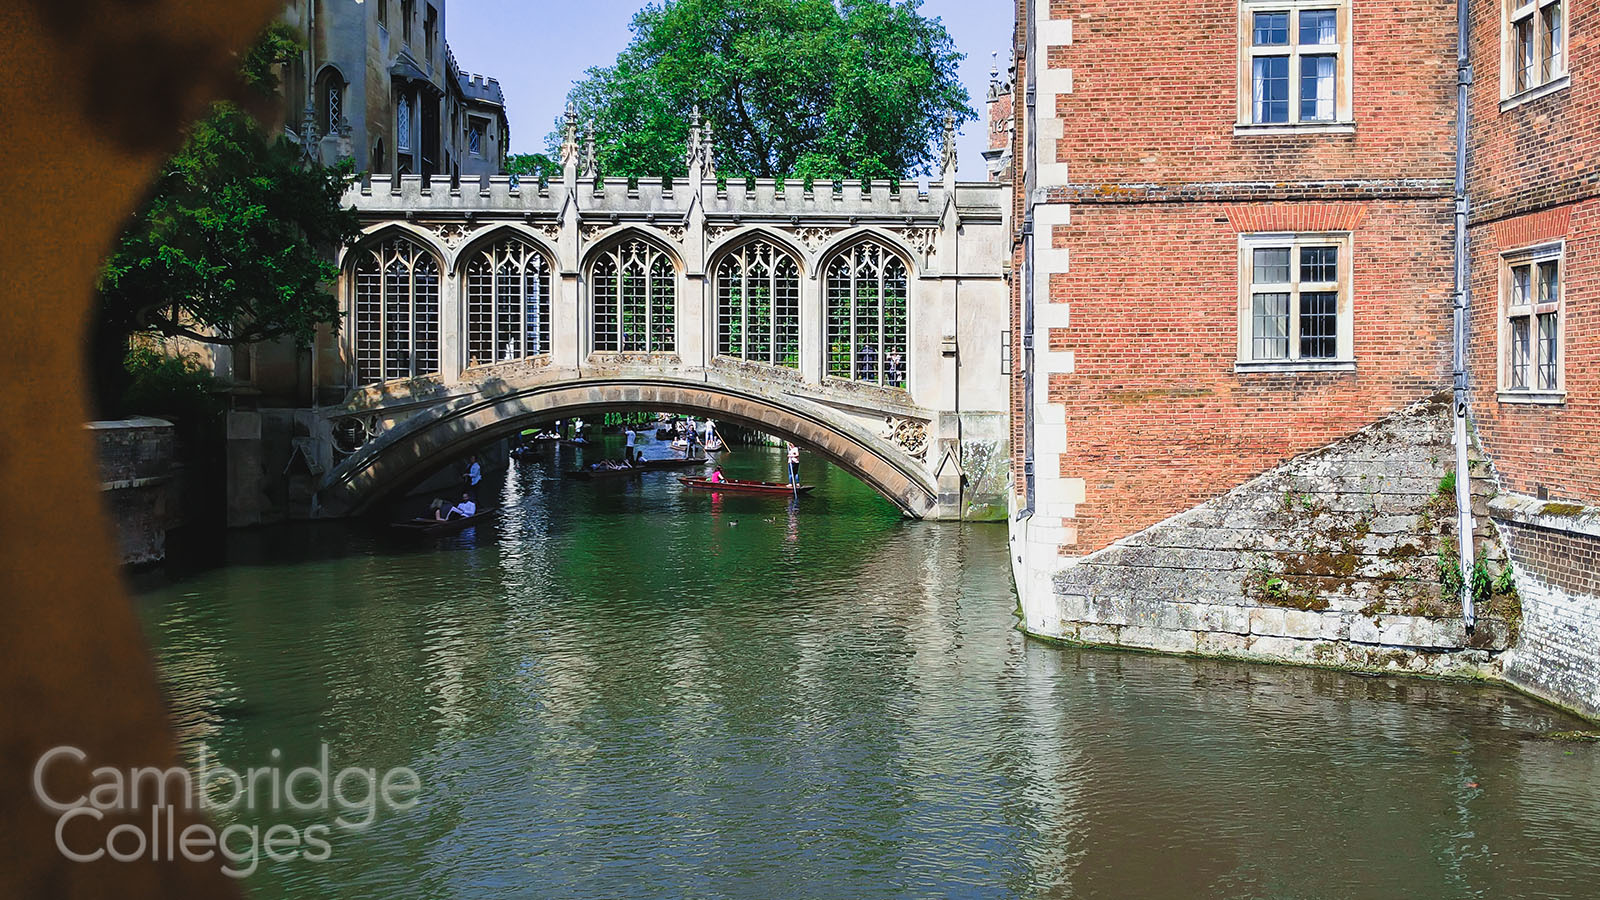 Bridge of sighs, St John's college, Cambridge